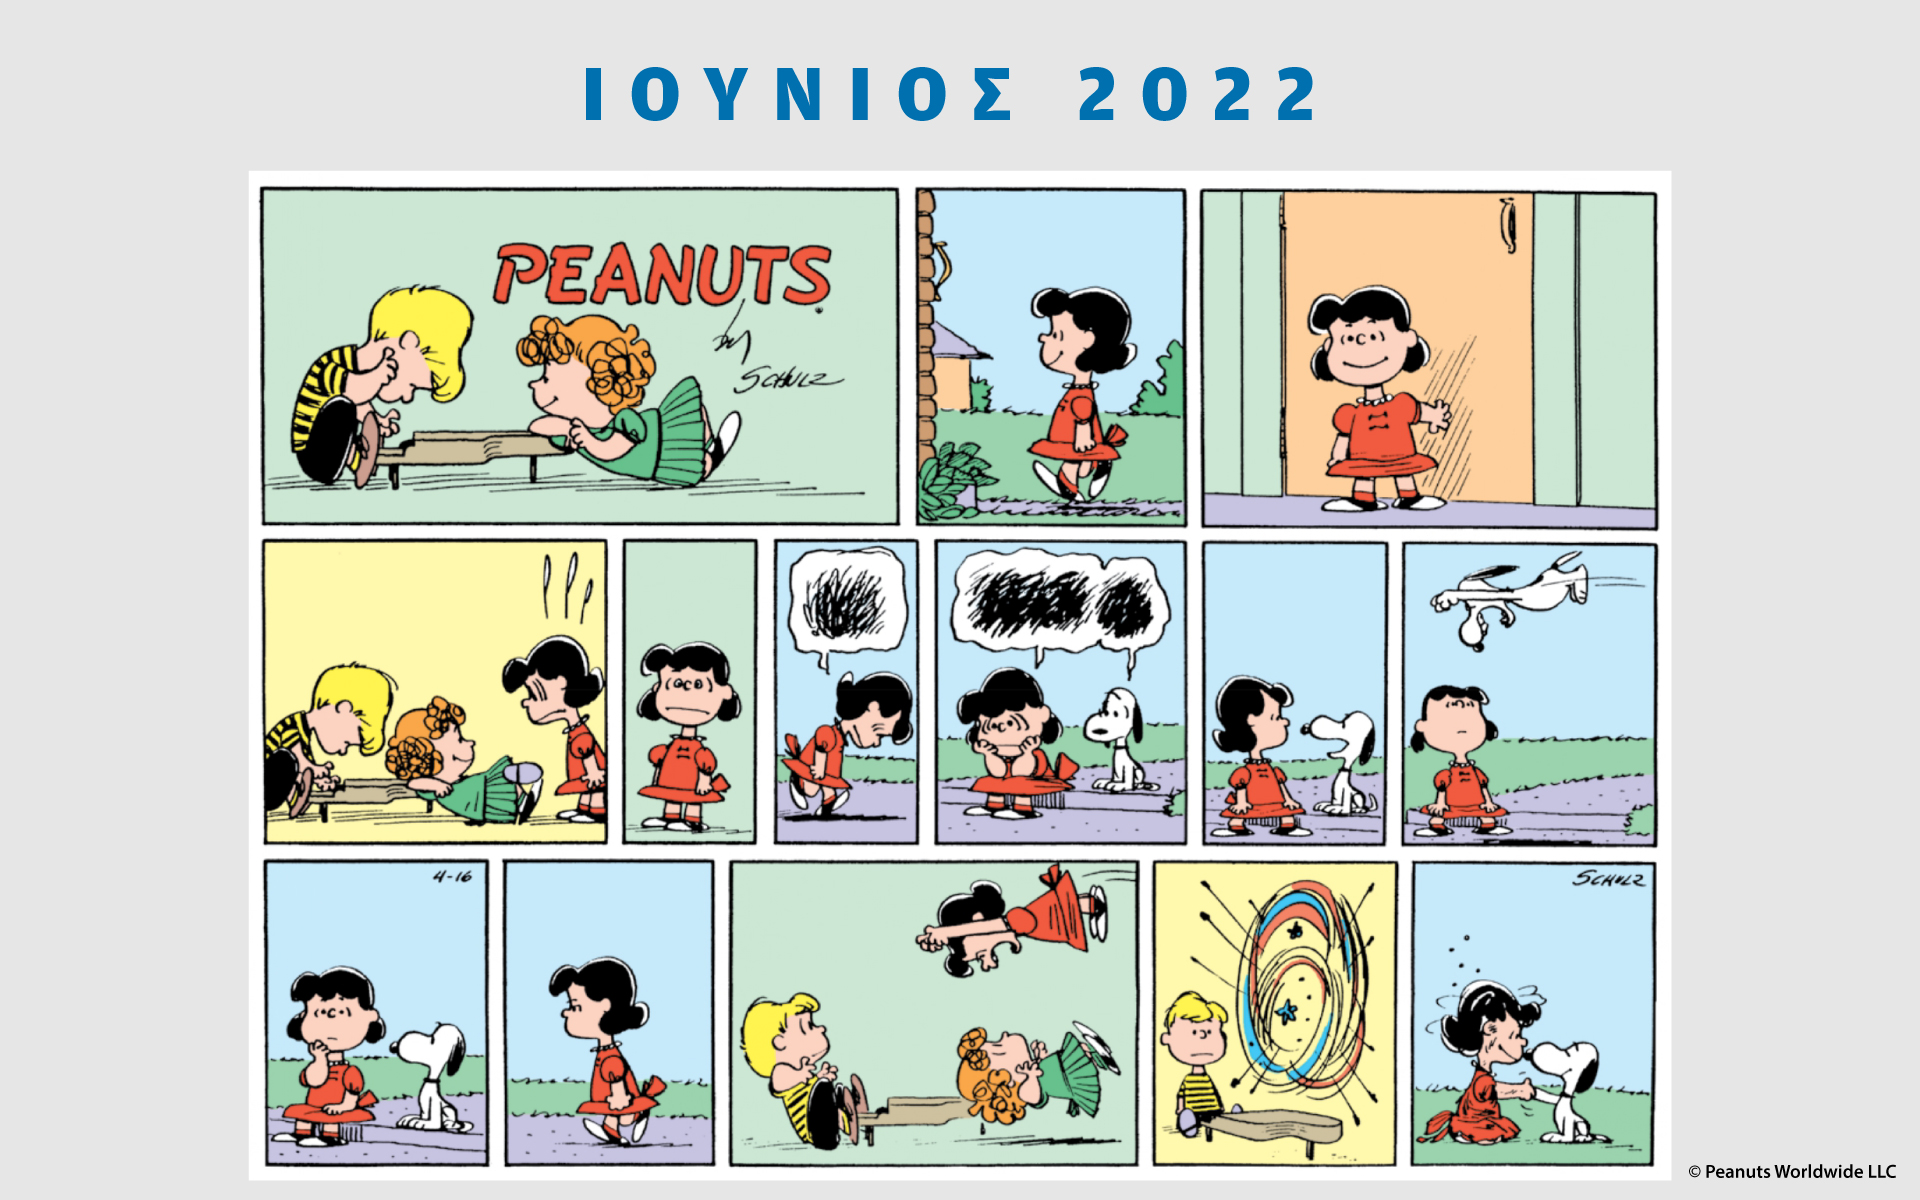 peanuts-kathe-mina-ioynios-2022-561896491